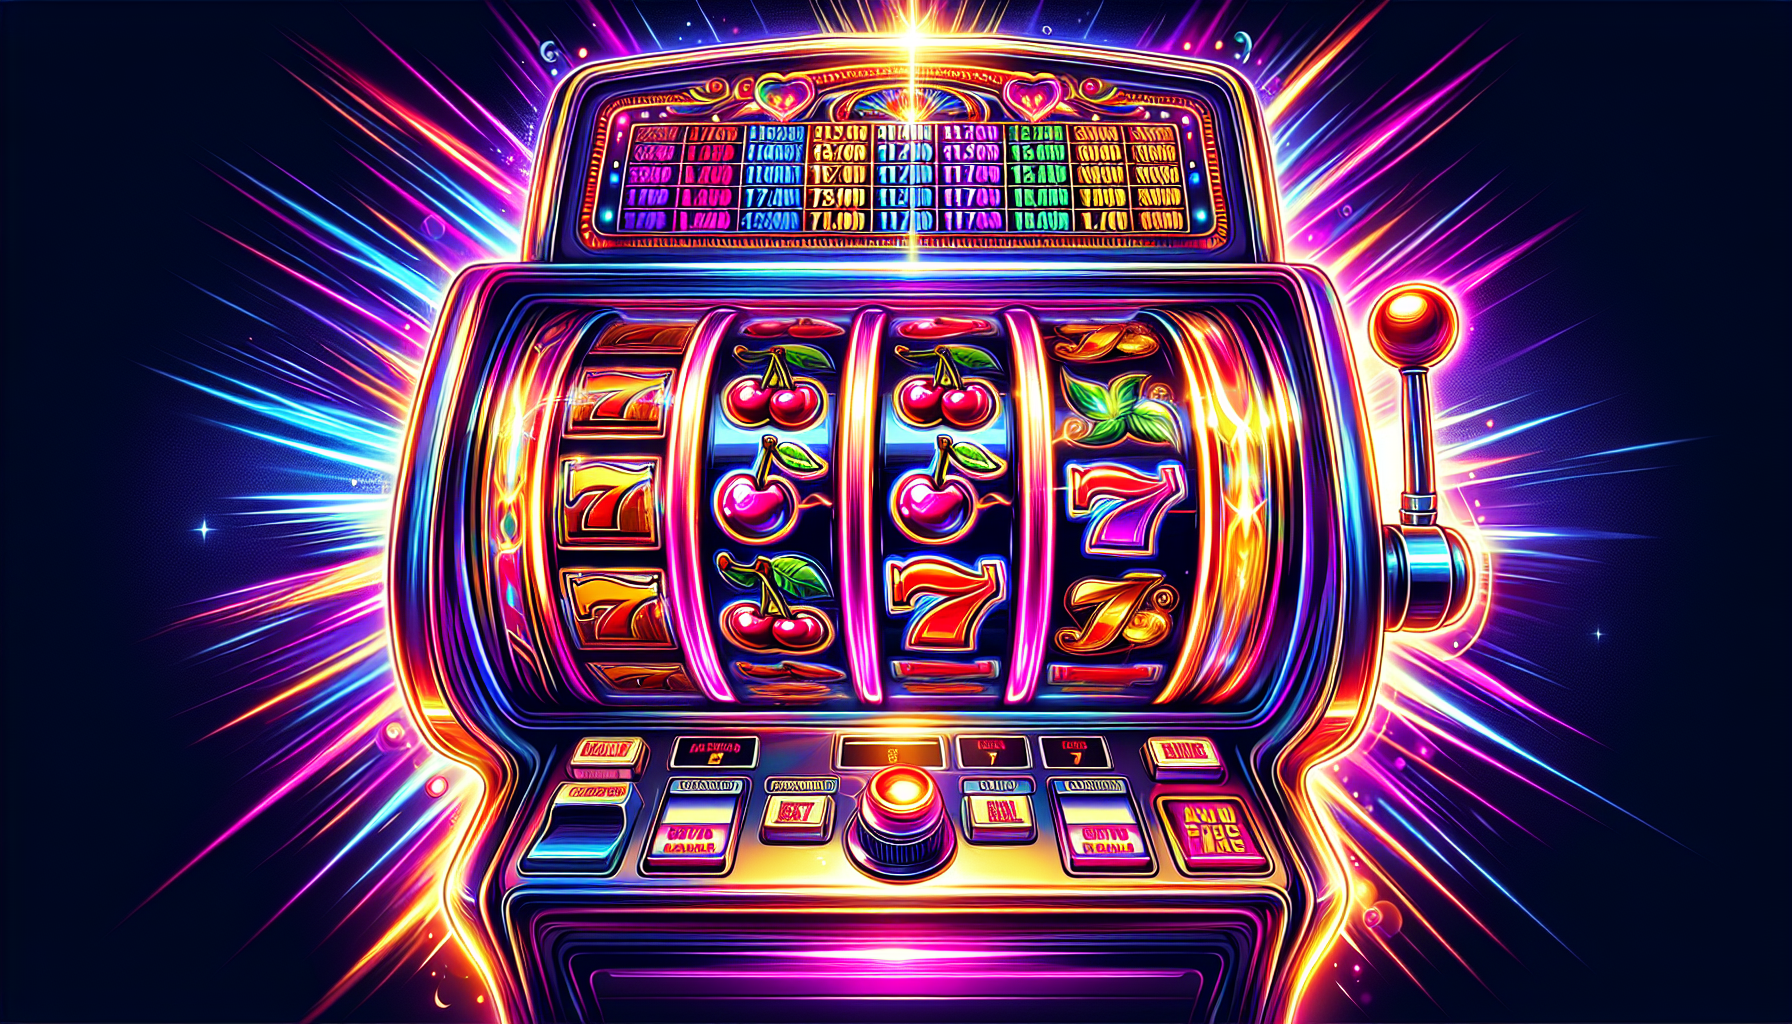 Colorful spinning slot machine illustration